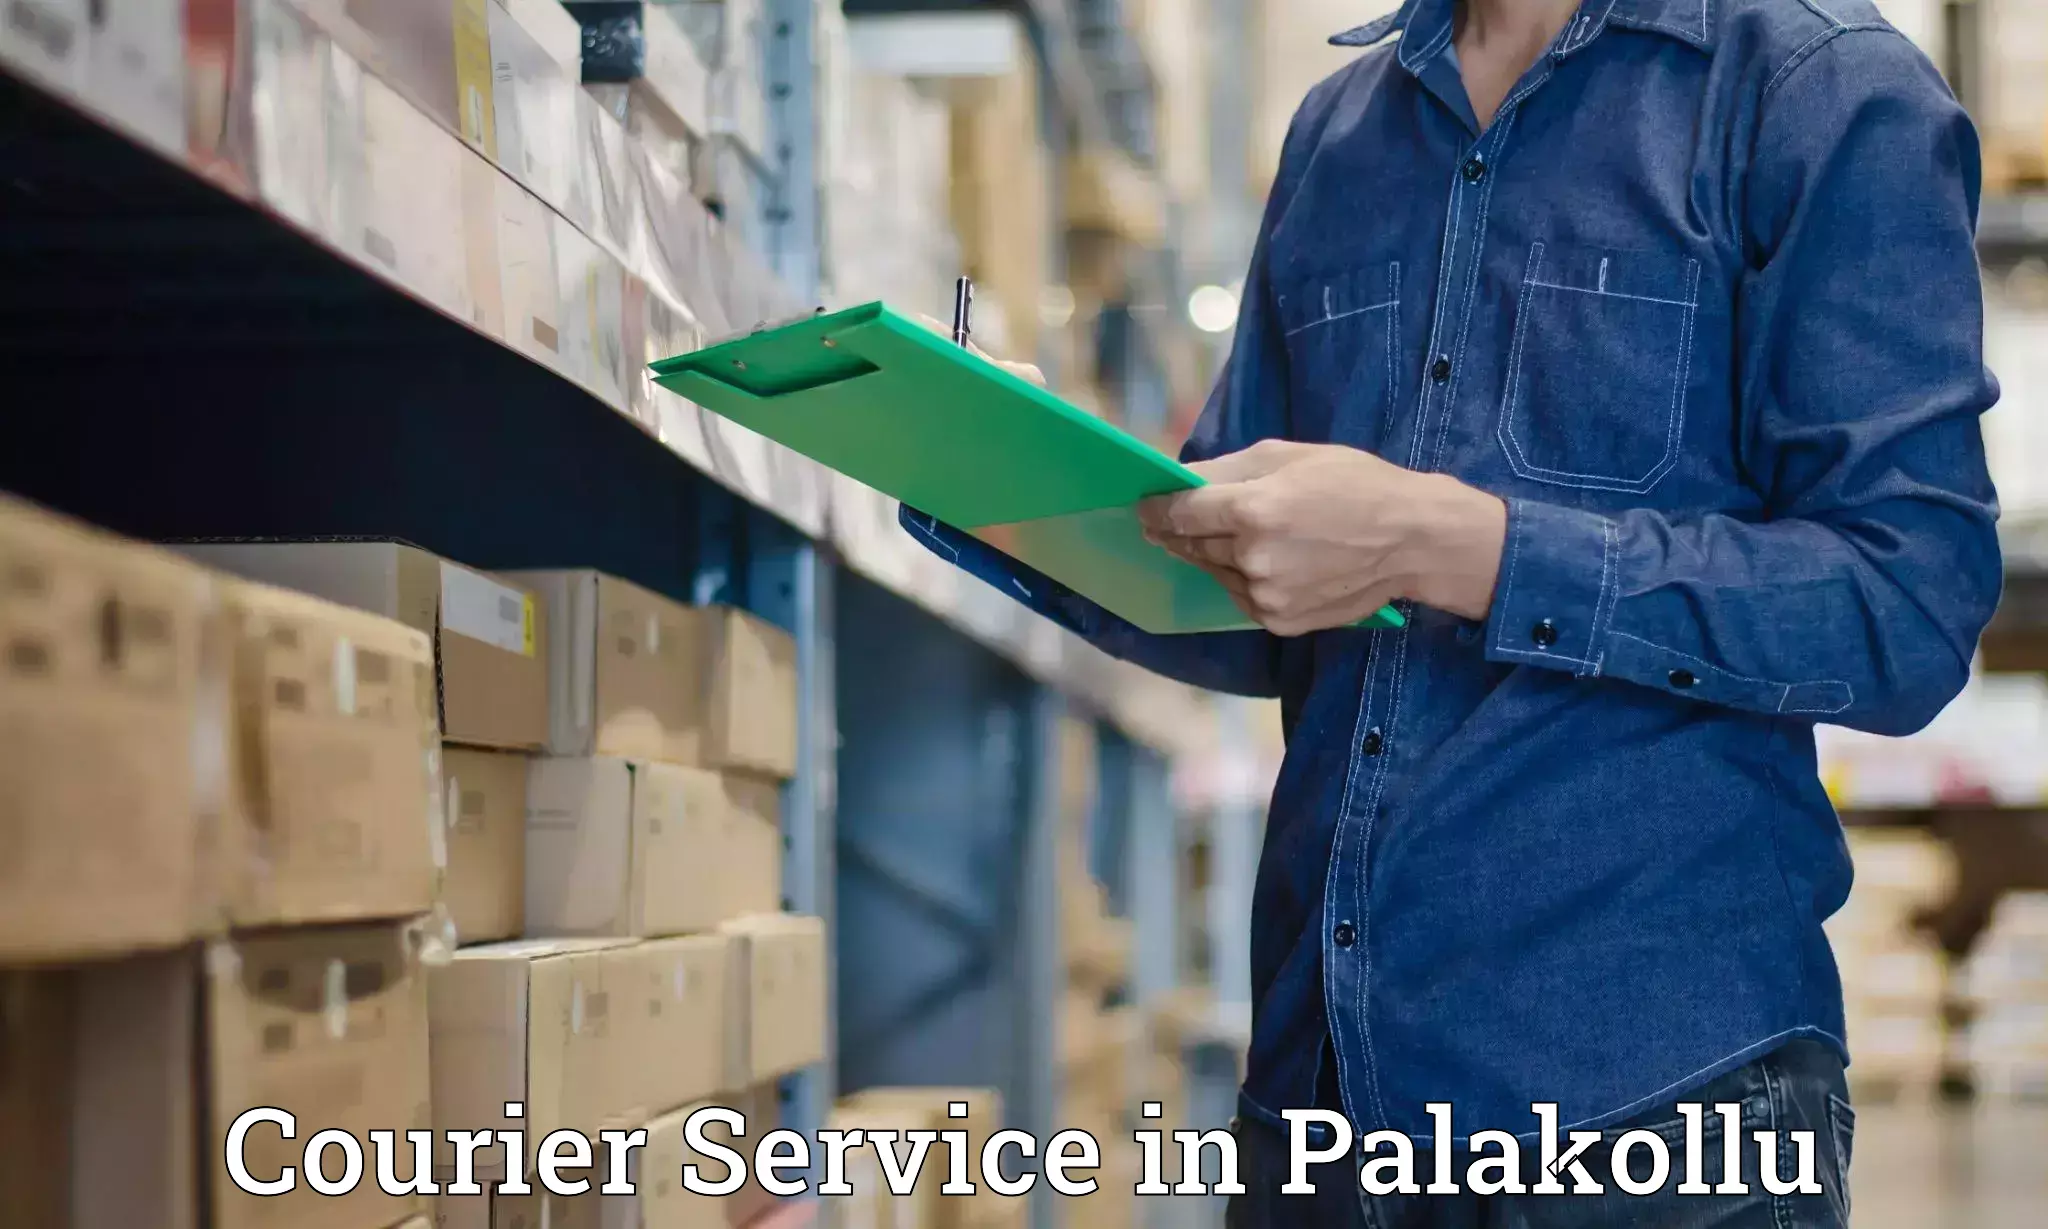 Express logistics service in Palakollu